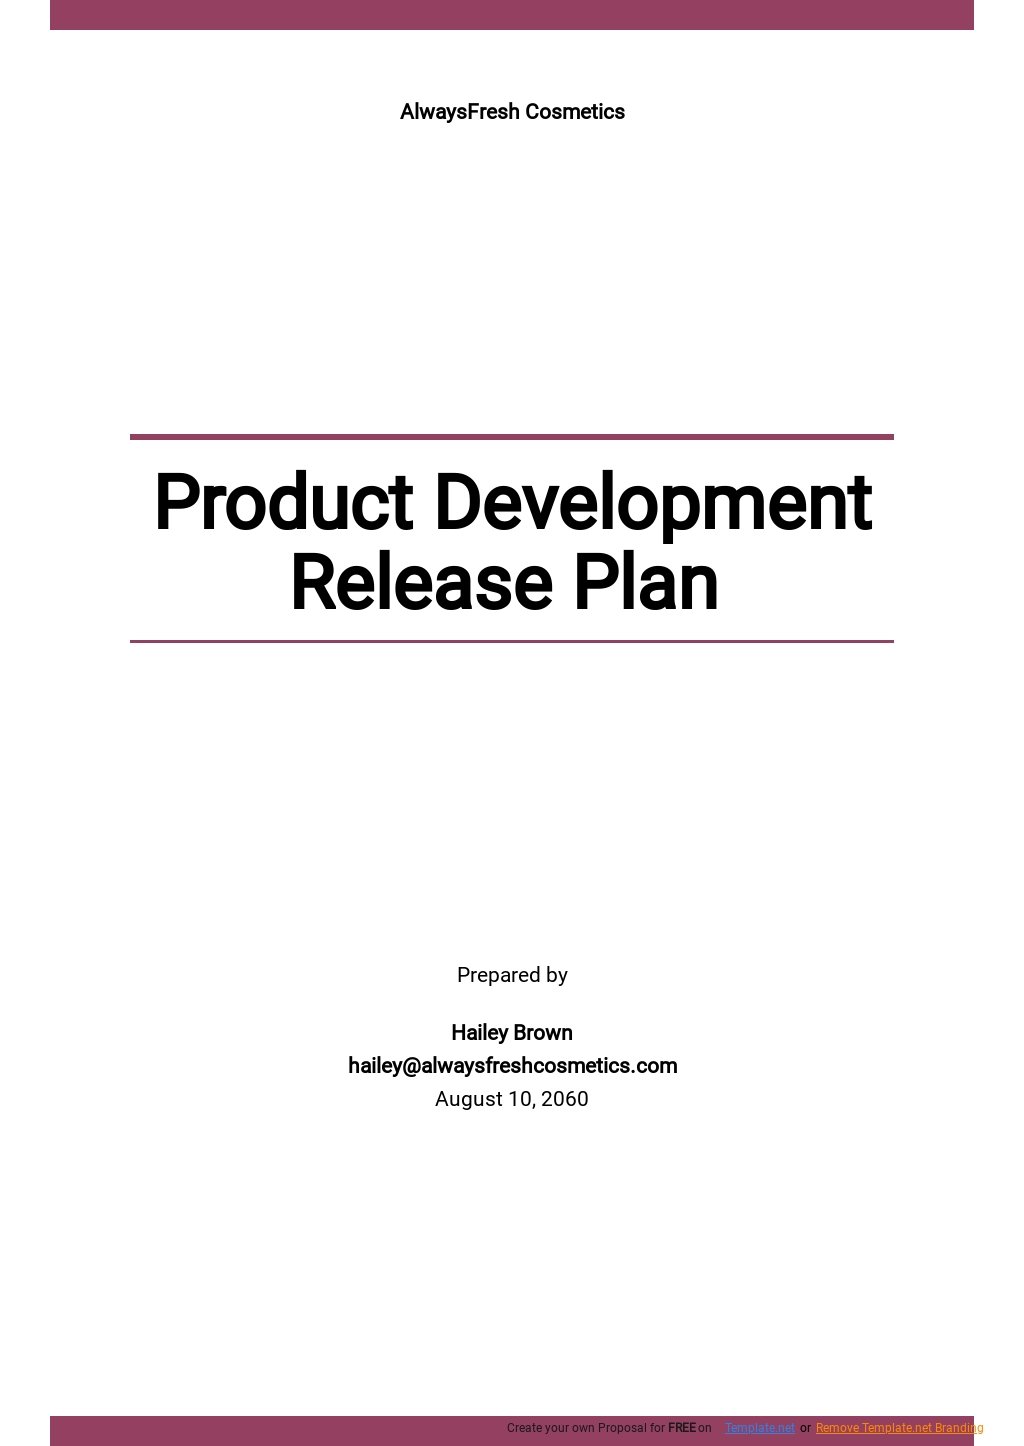 Product Development Proposal Template